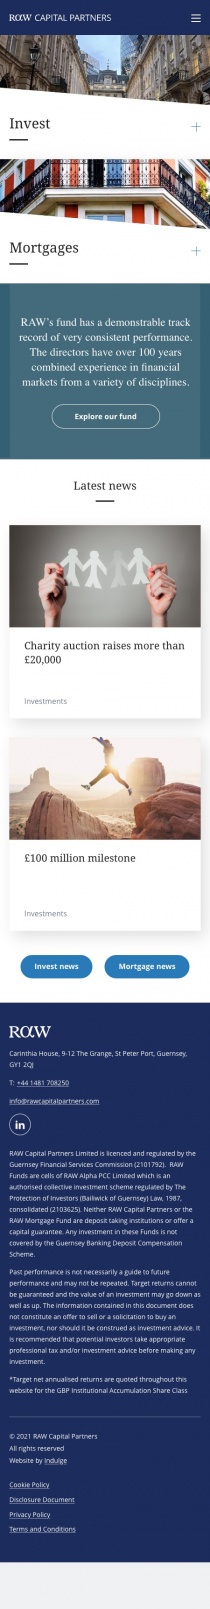 RAW Capital website homepage screenshot on mobile device